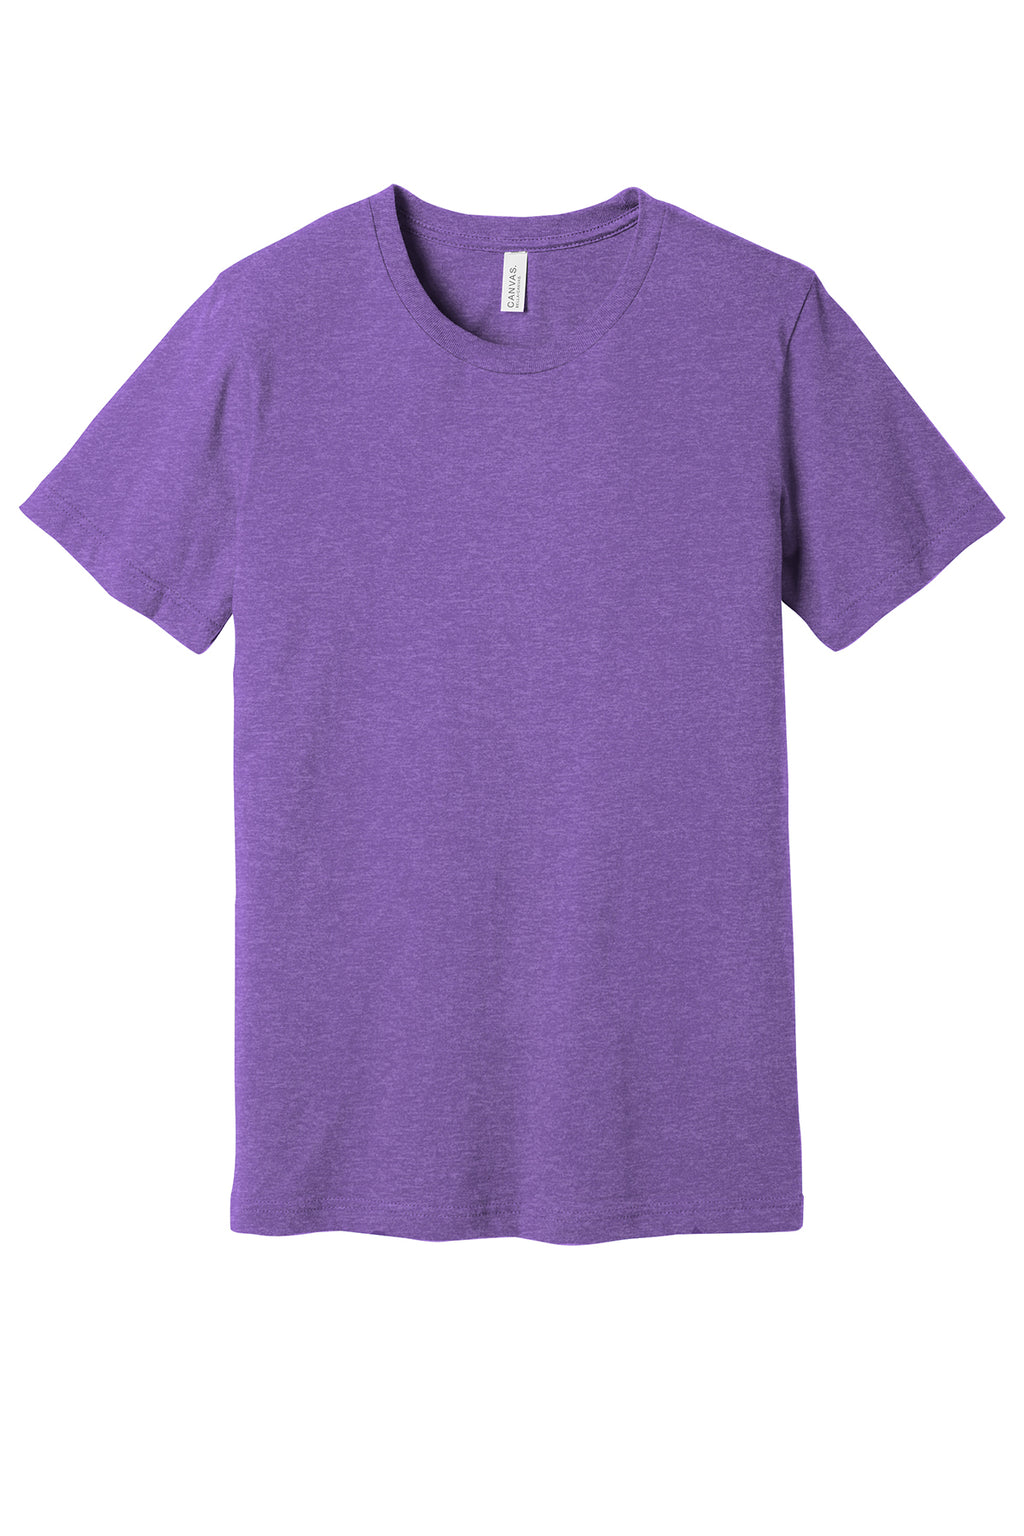 Bella Canvas Mens/Unisex Cotton Short Sleeve Shirts Heather Team Purple